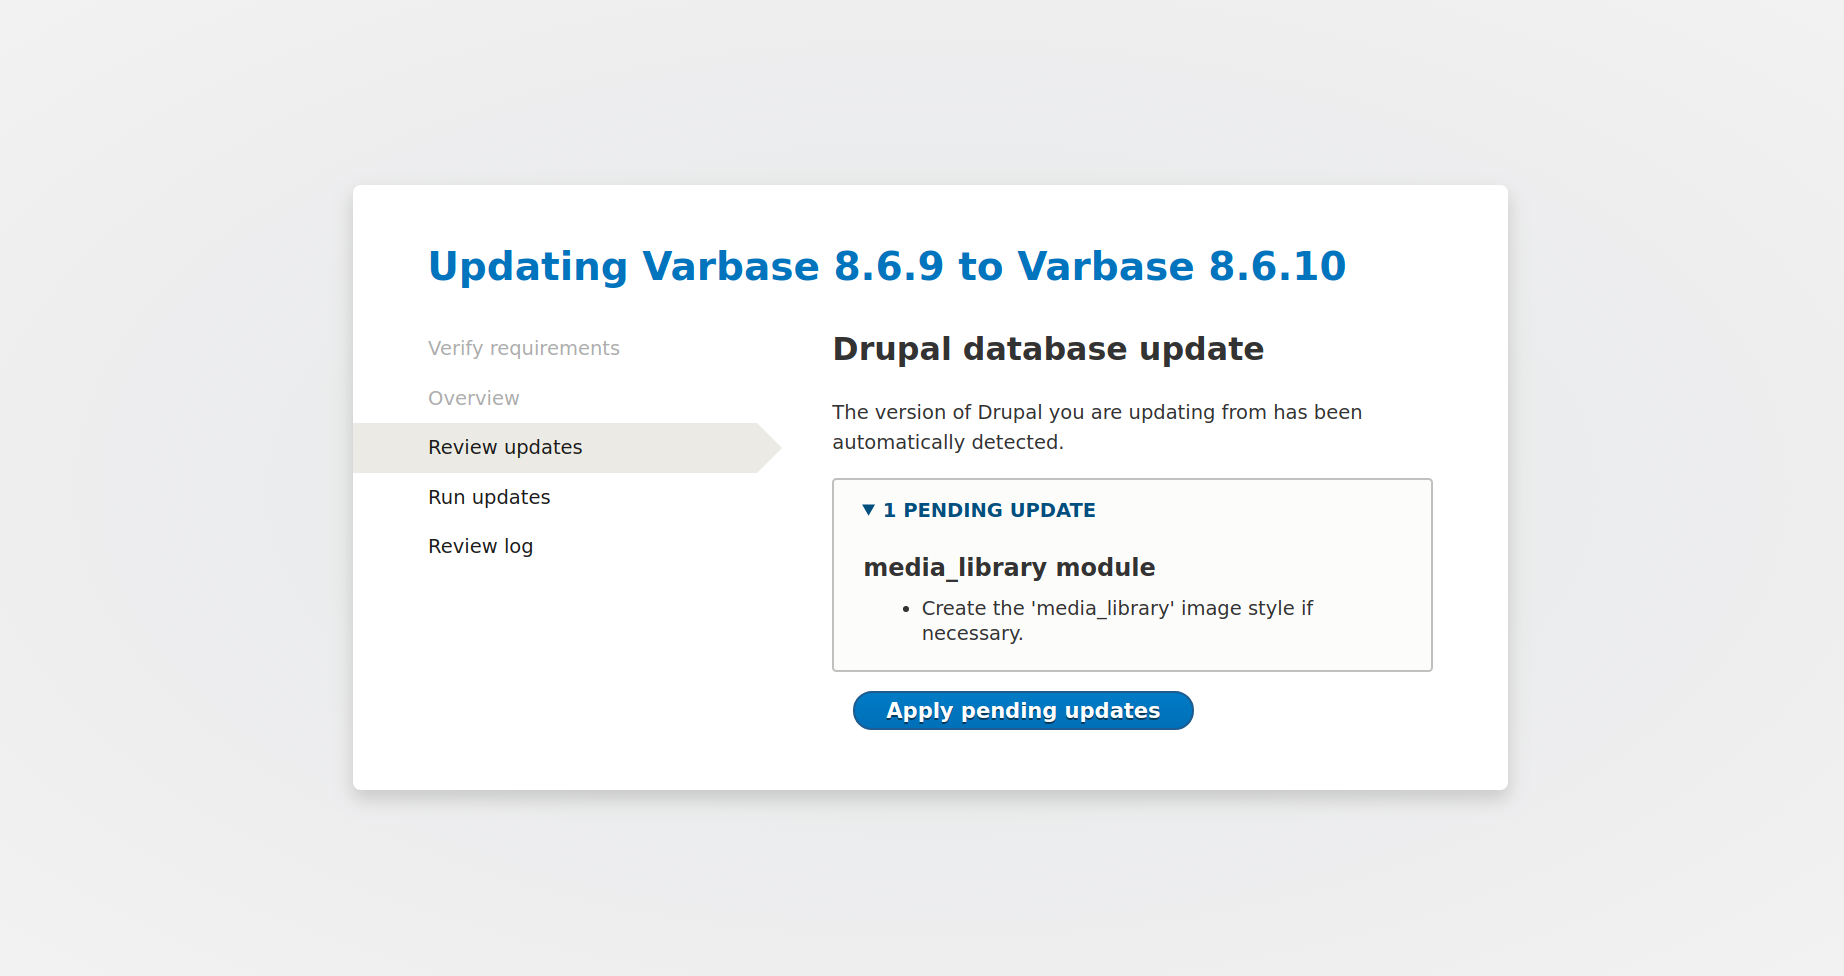 Updating Varbase 8.6.10 to Varbase 8.6.